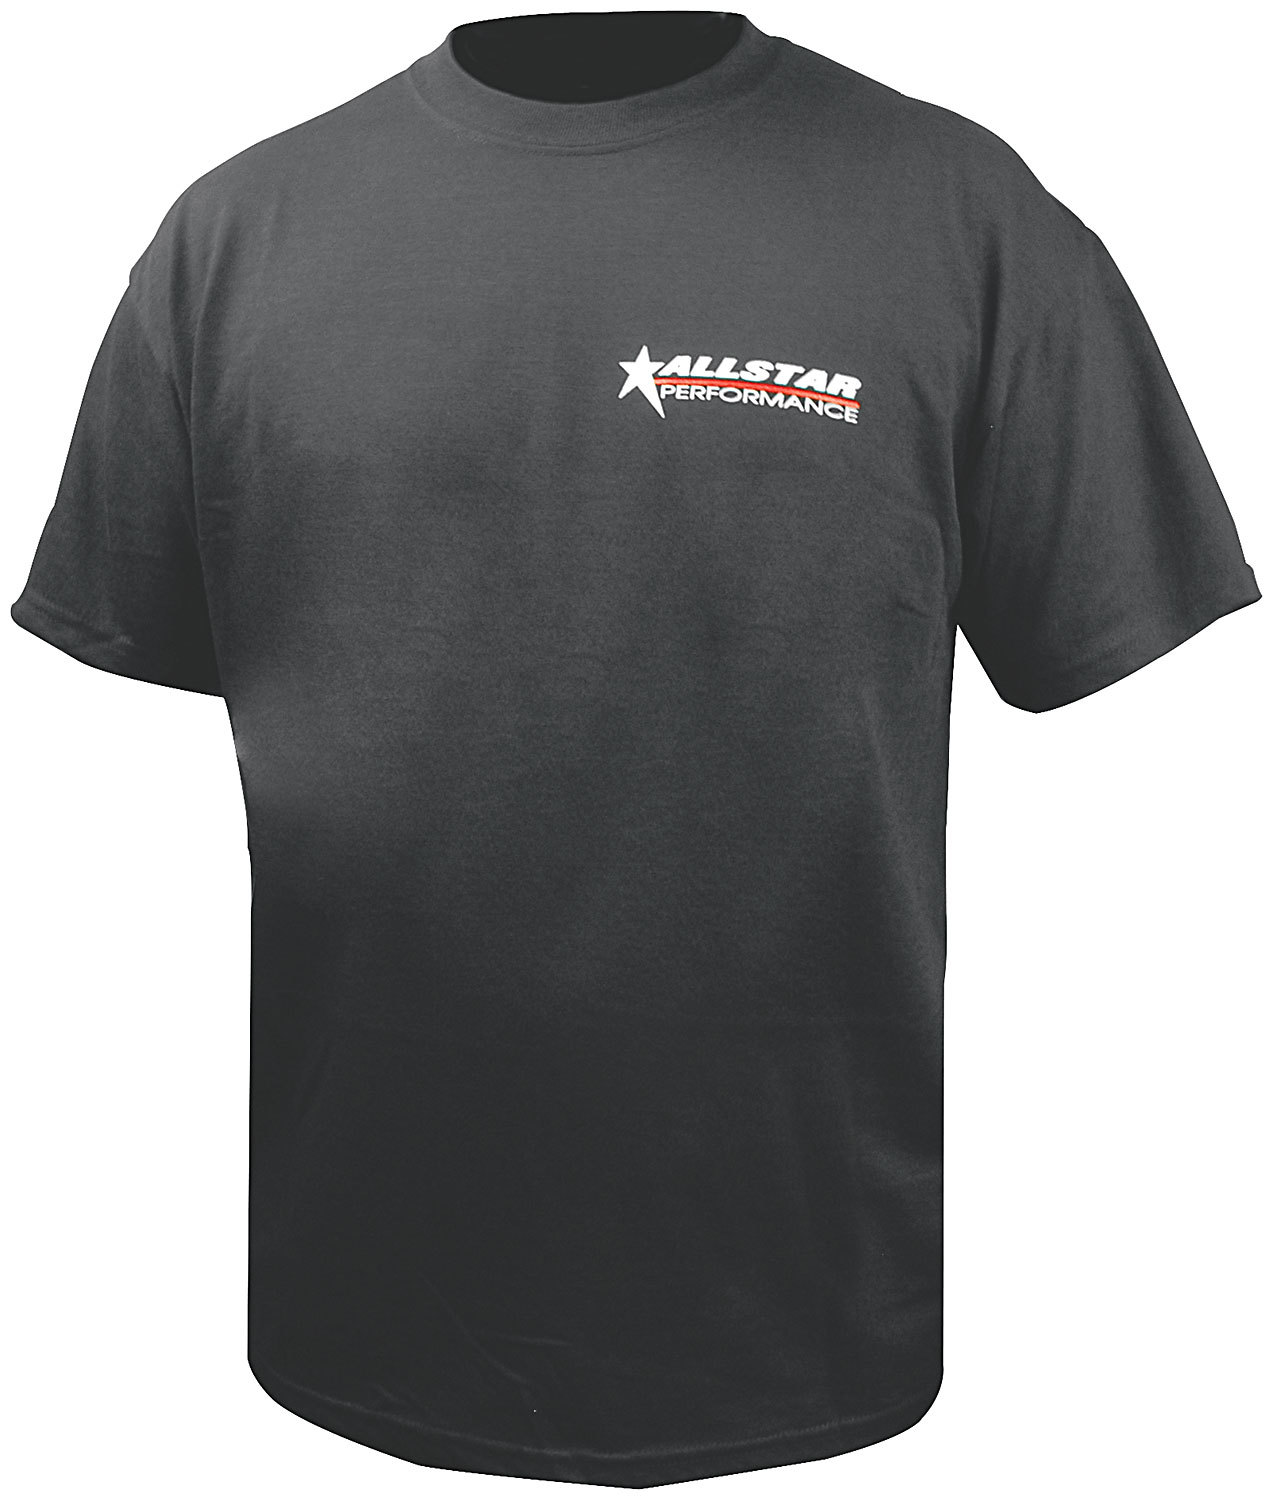 Allstar Performance  T-Shirt Charcoal XX-Large